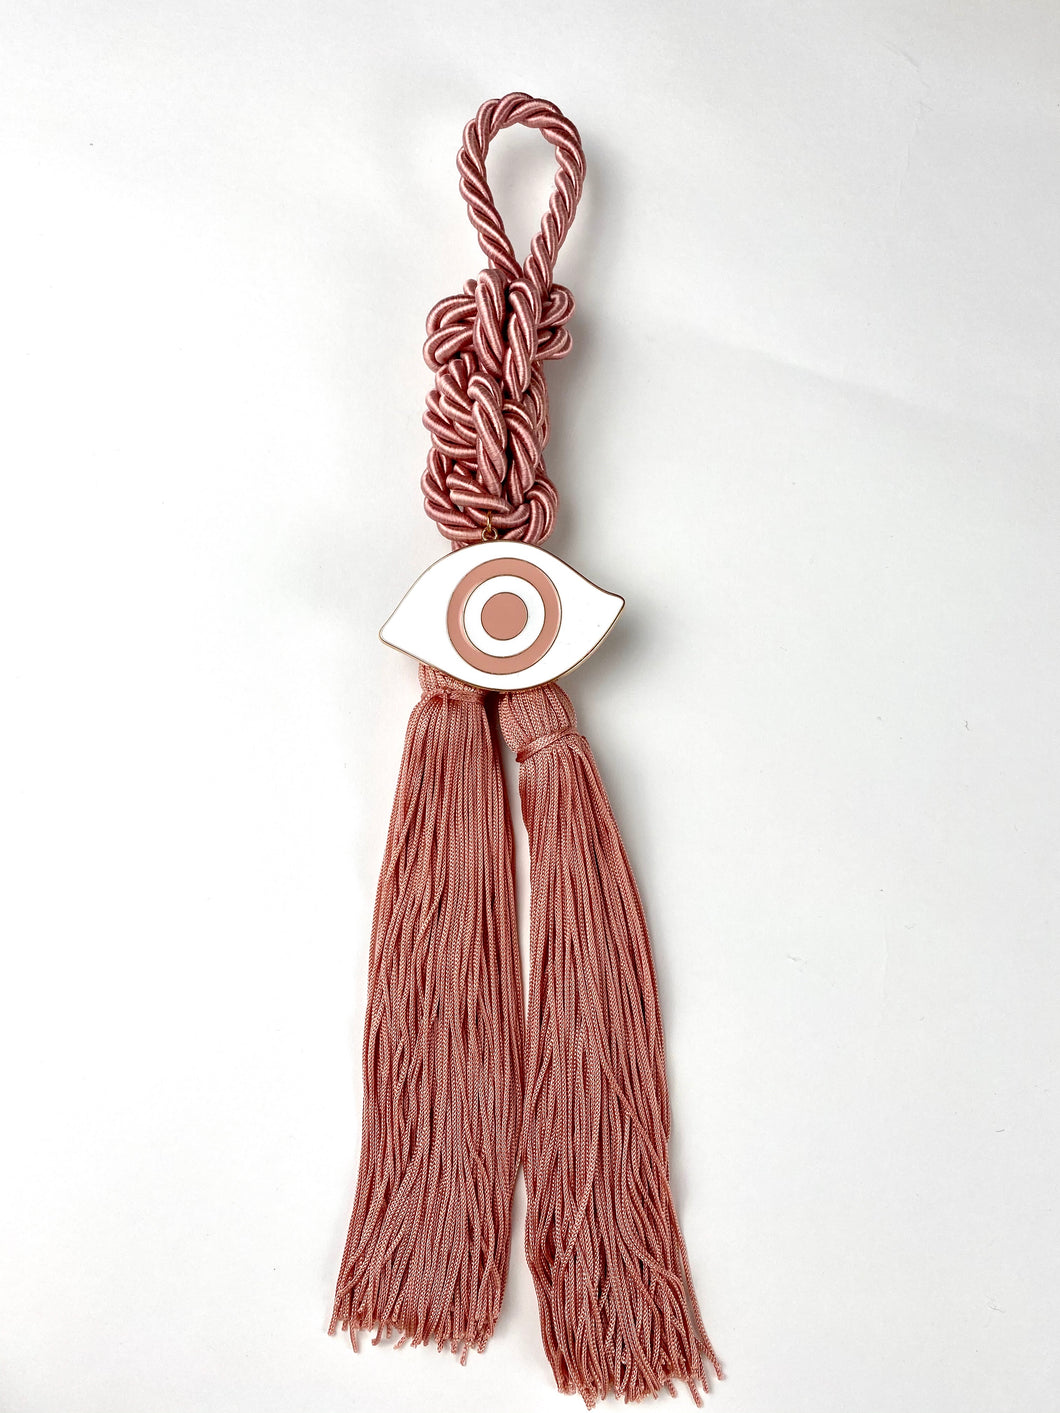 Gouri 1034 Pearl cord Gouri, Metal  Mati, extra long tassels. 16”  length